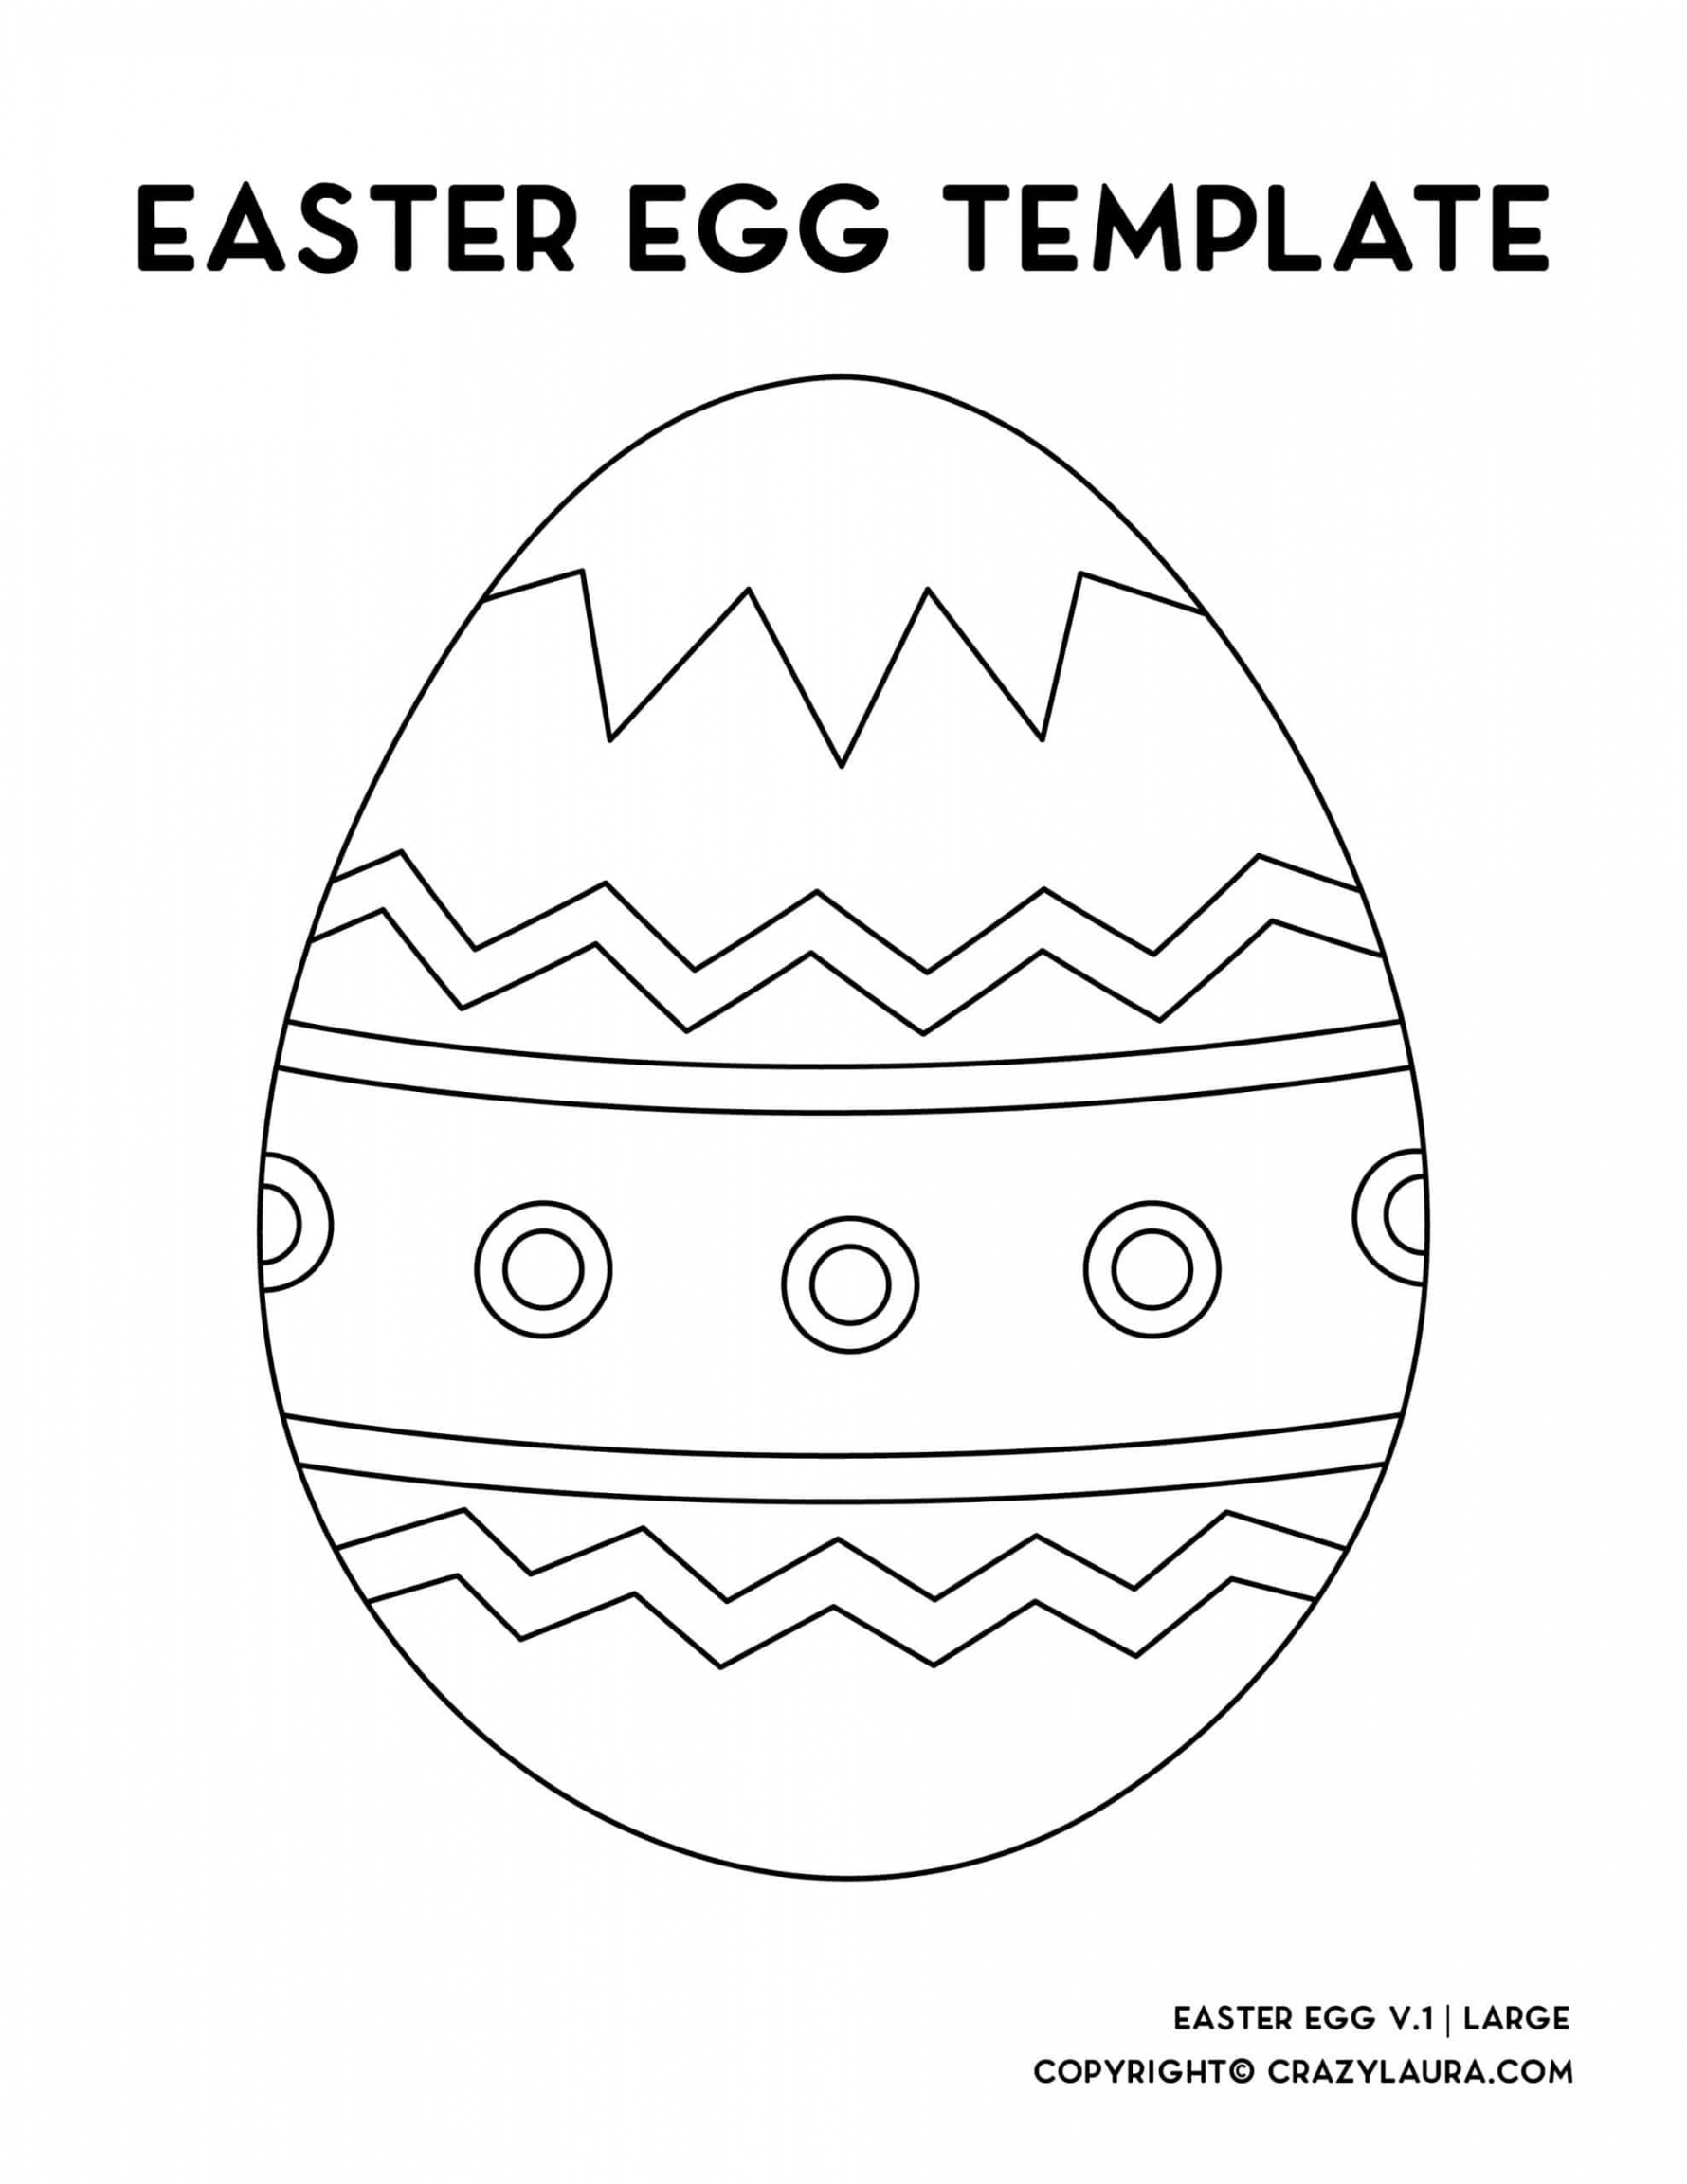 Free Printable Easter Templates - Free Printable Hq